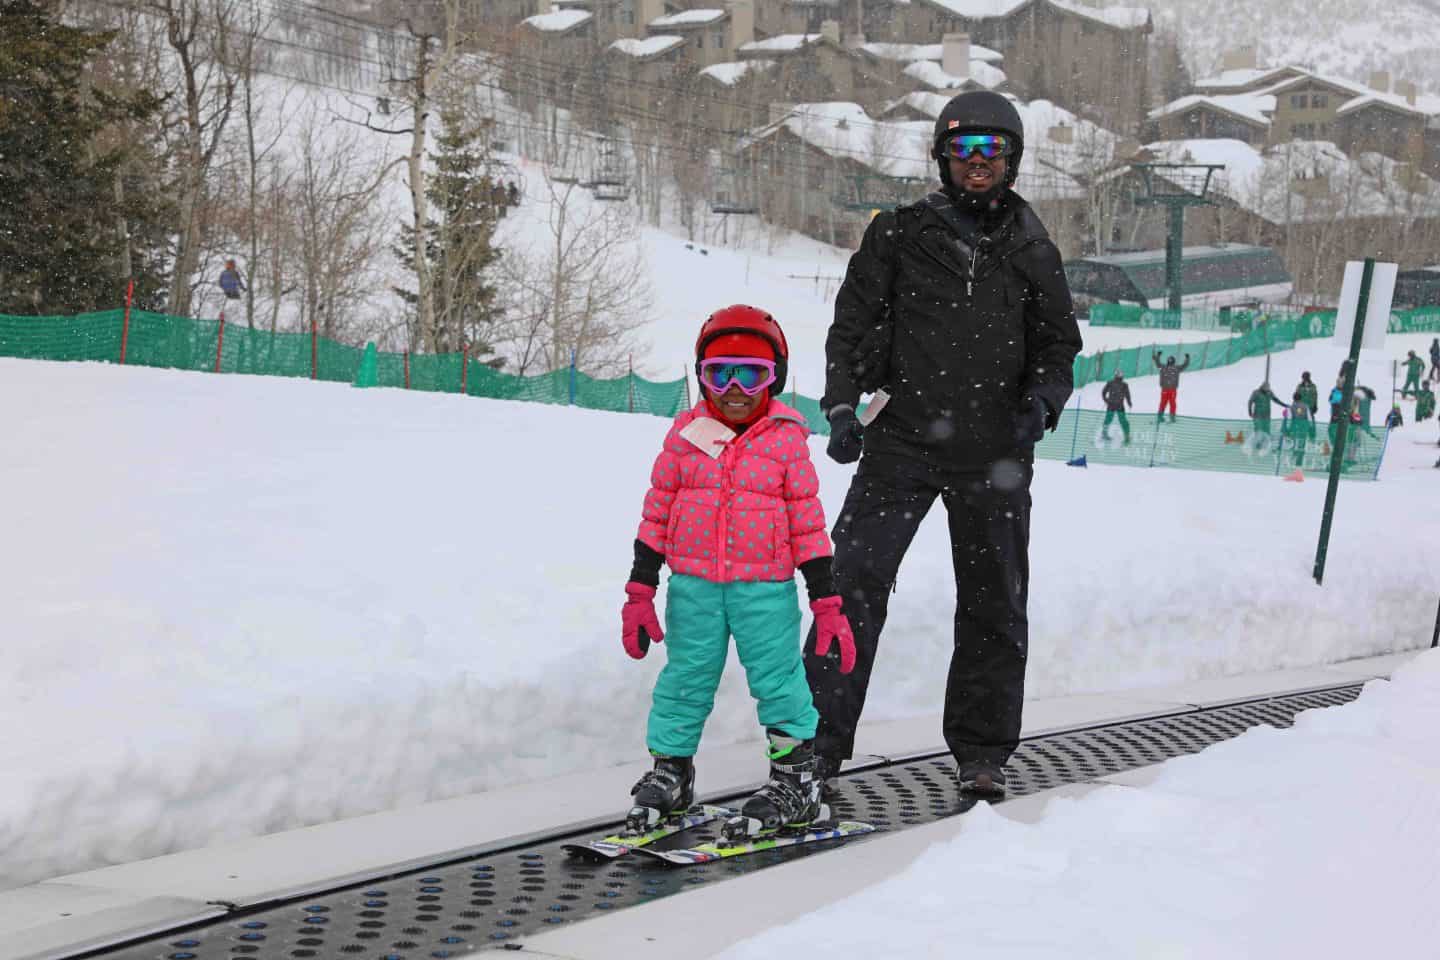 deer valley resort - skiing with kids